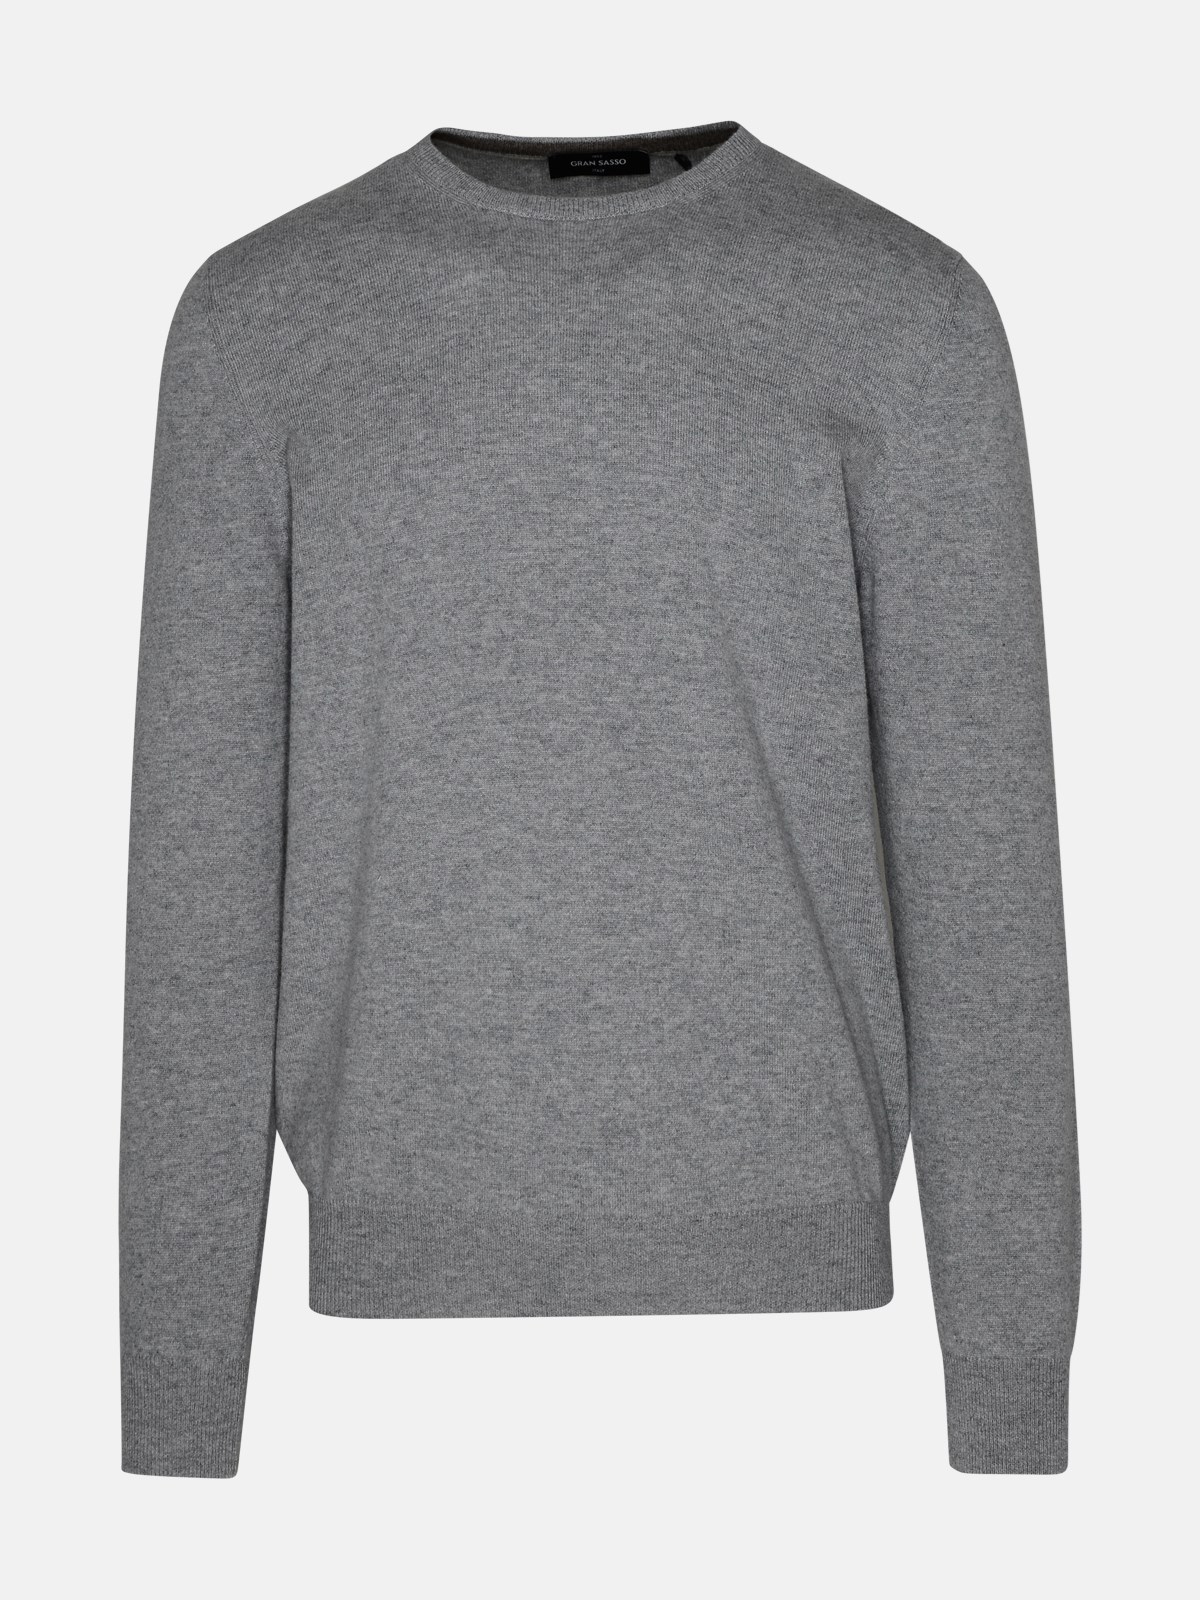 Gran Sasso Grey Cashmere Sweater